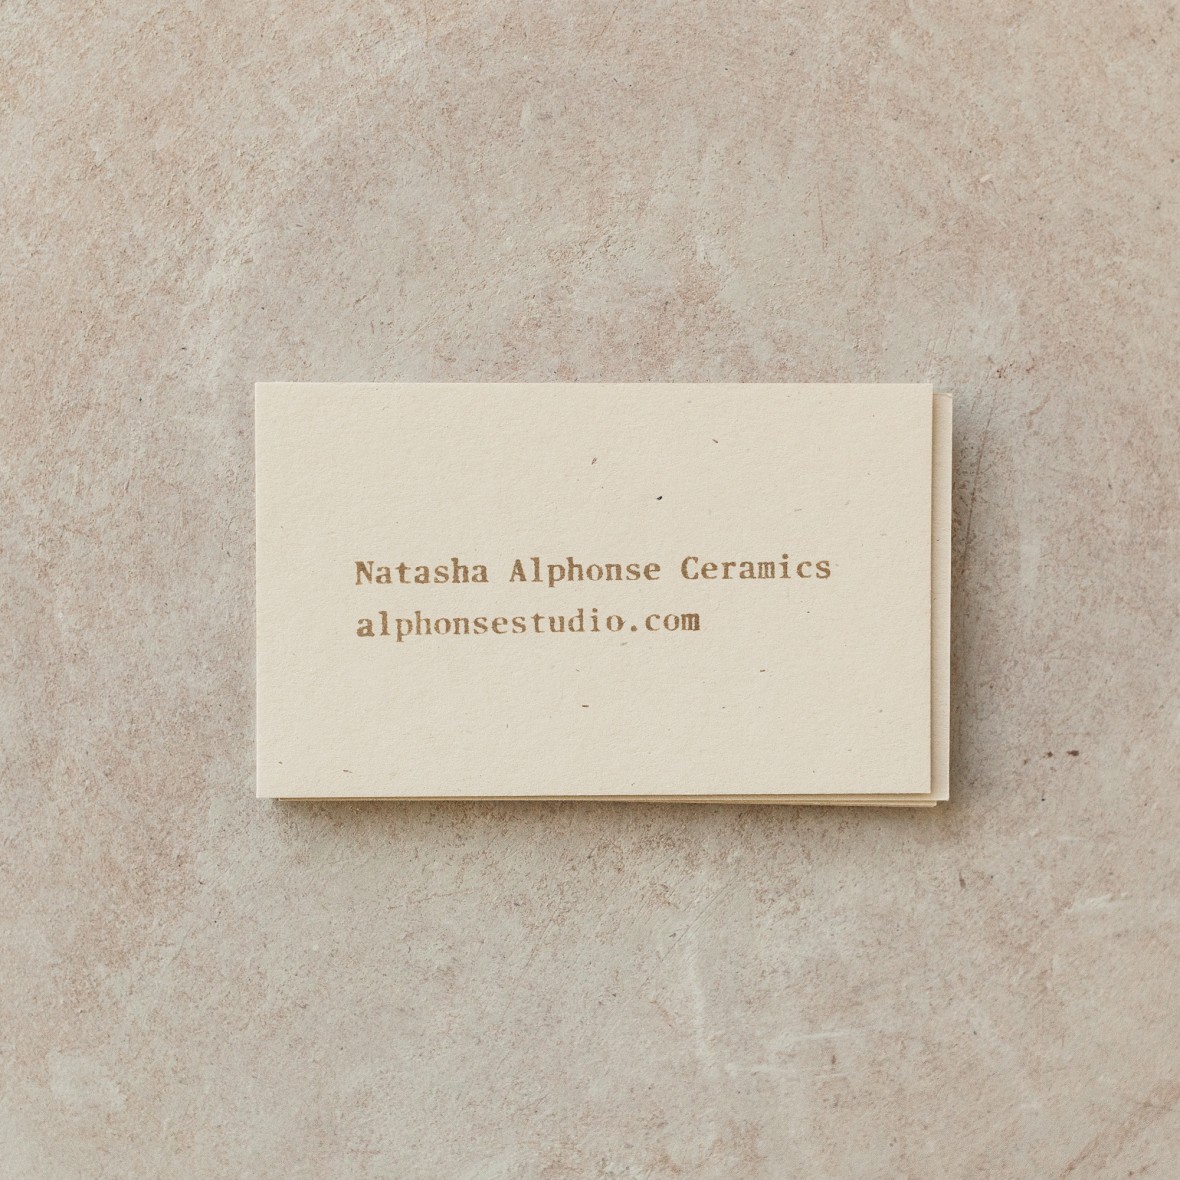 Brand identity and business card by Seattle-based design studio Shore for Natasha Alphonse Ceramics